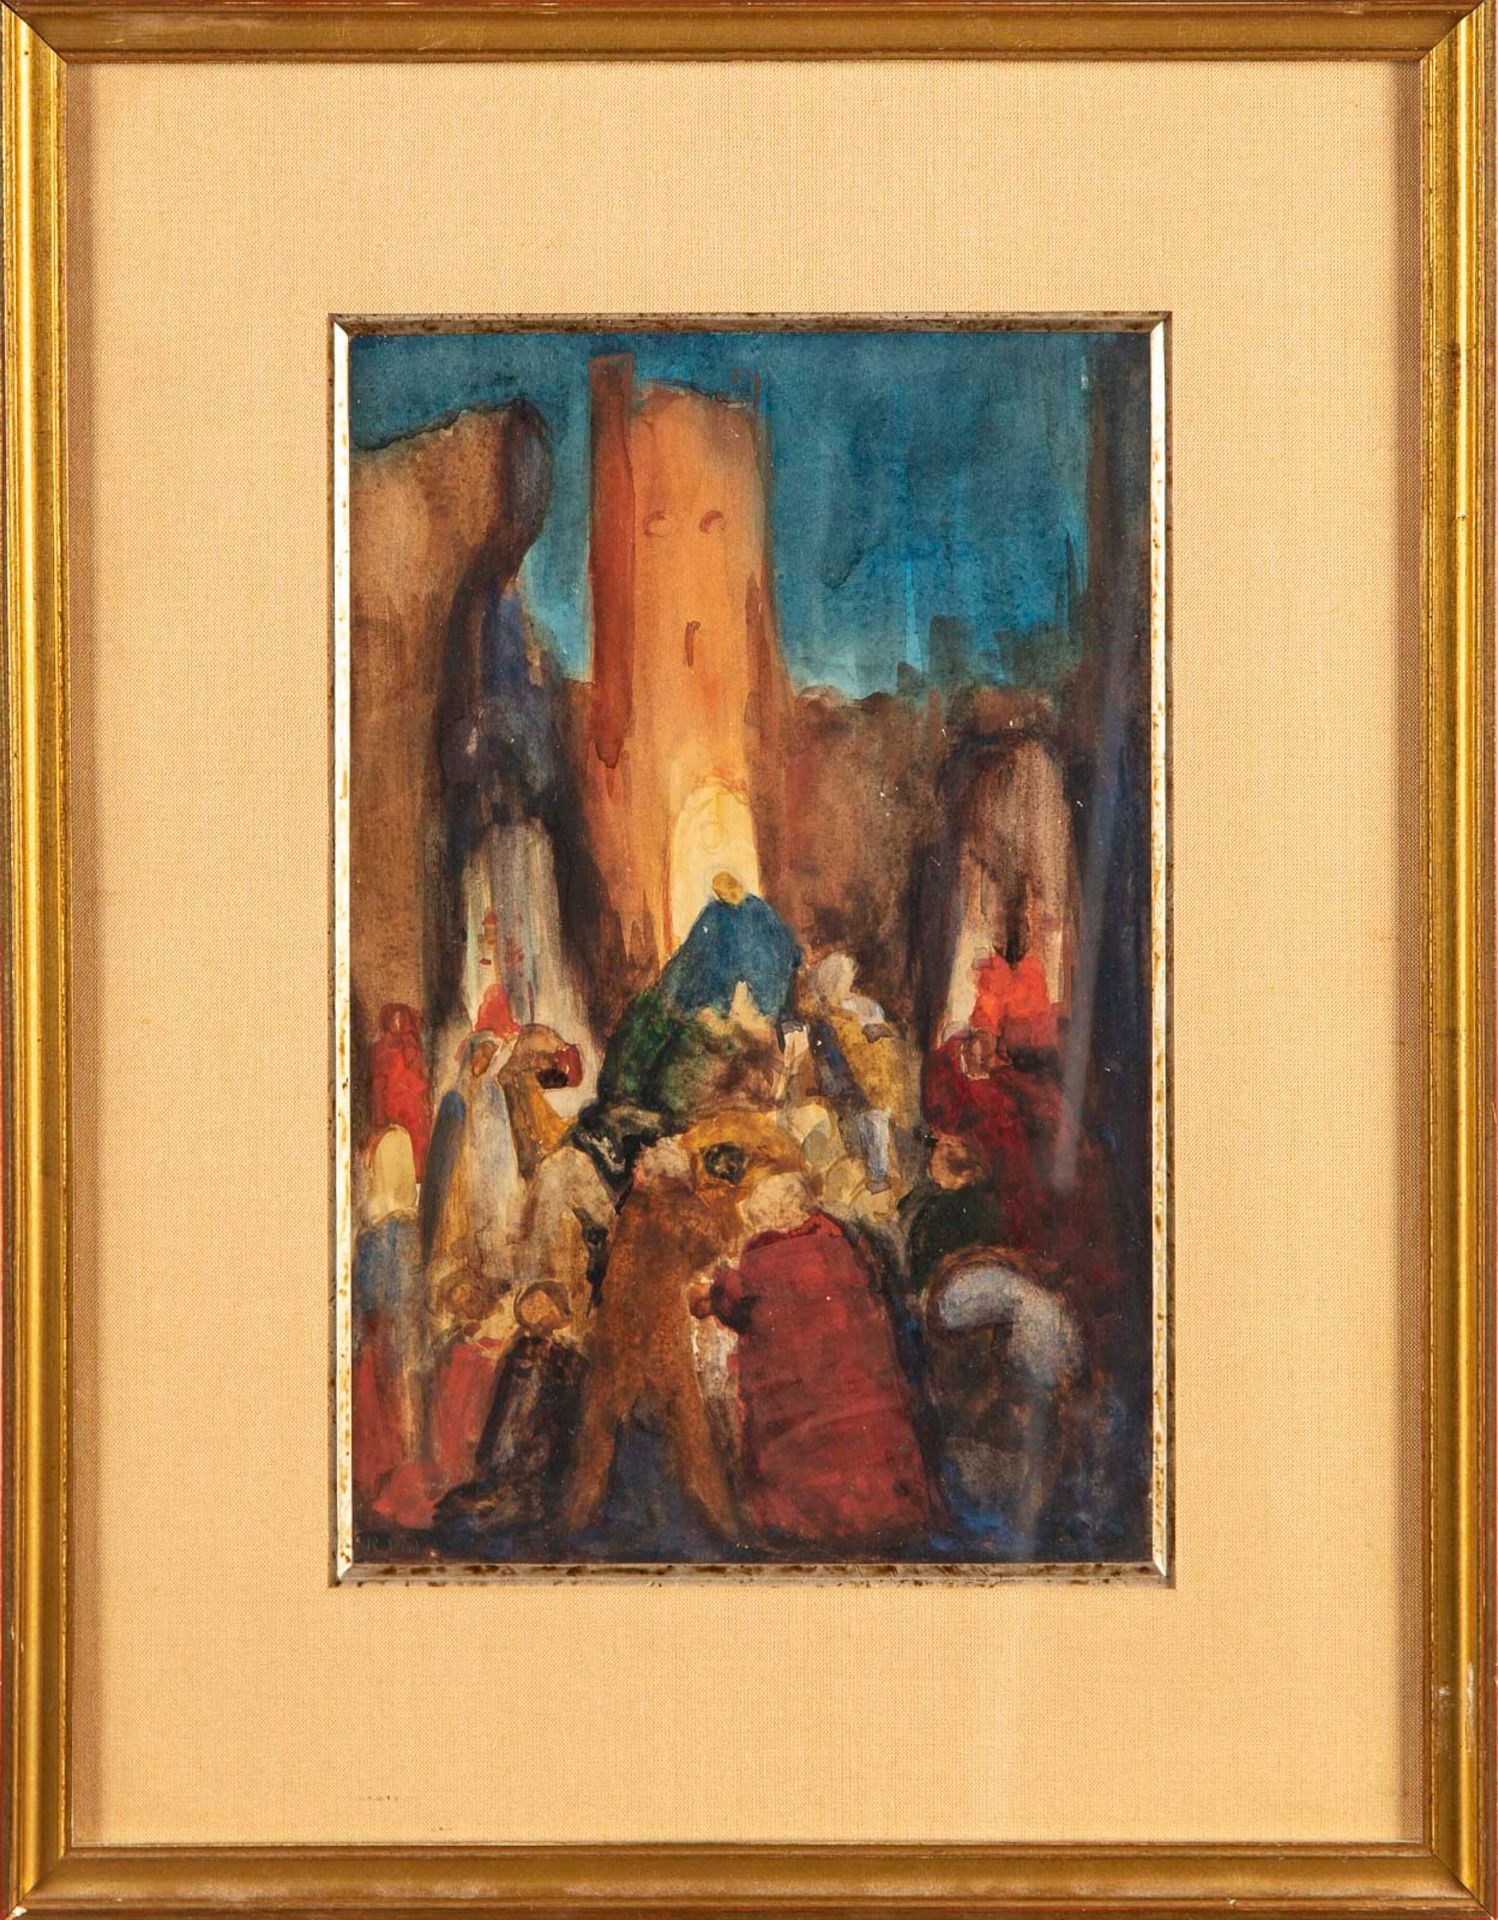 PIOT 勒内-皮奥特 (1869-1934)

城市中的东方人物

水彩画，左下方有铅笔签名

26 x 16.5 cm

出处：André Level收藏，&hellip;